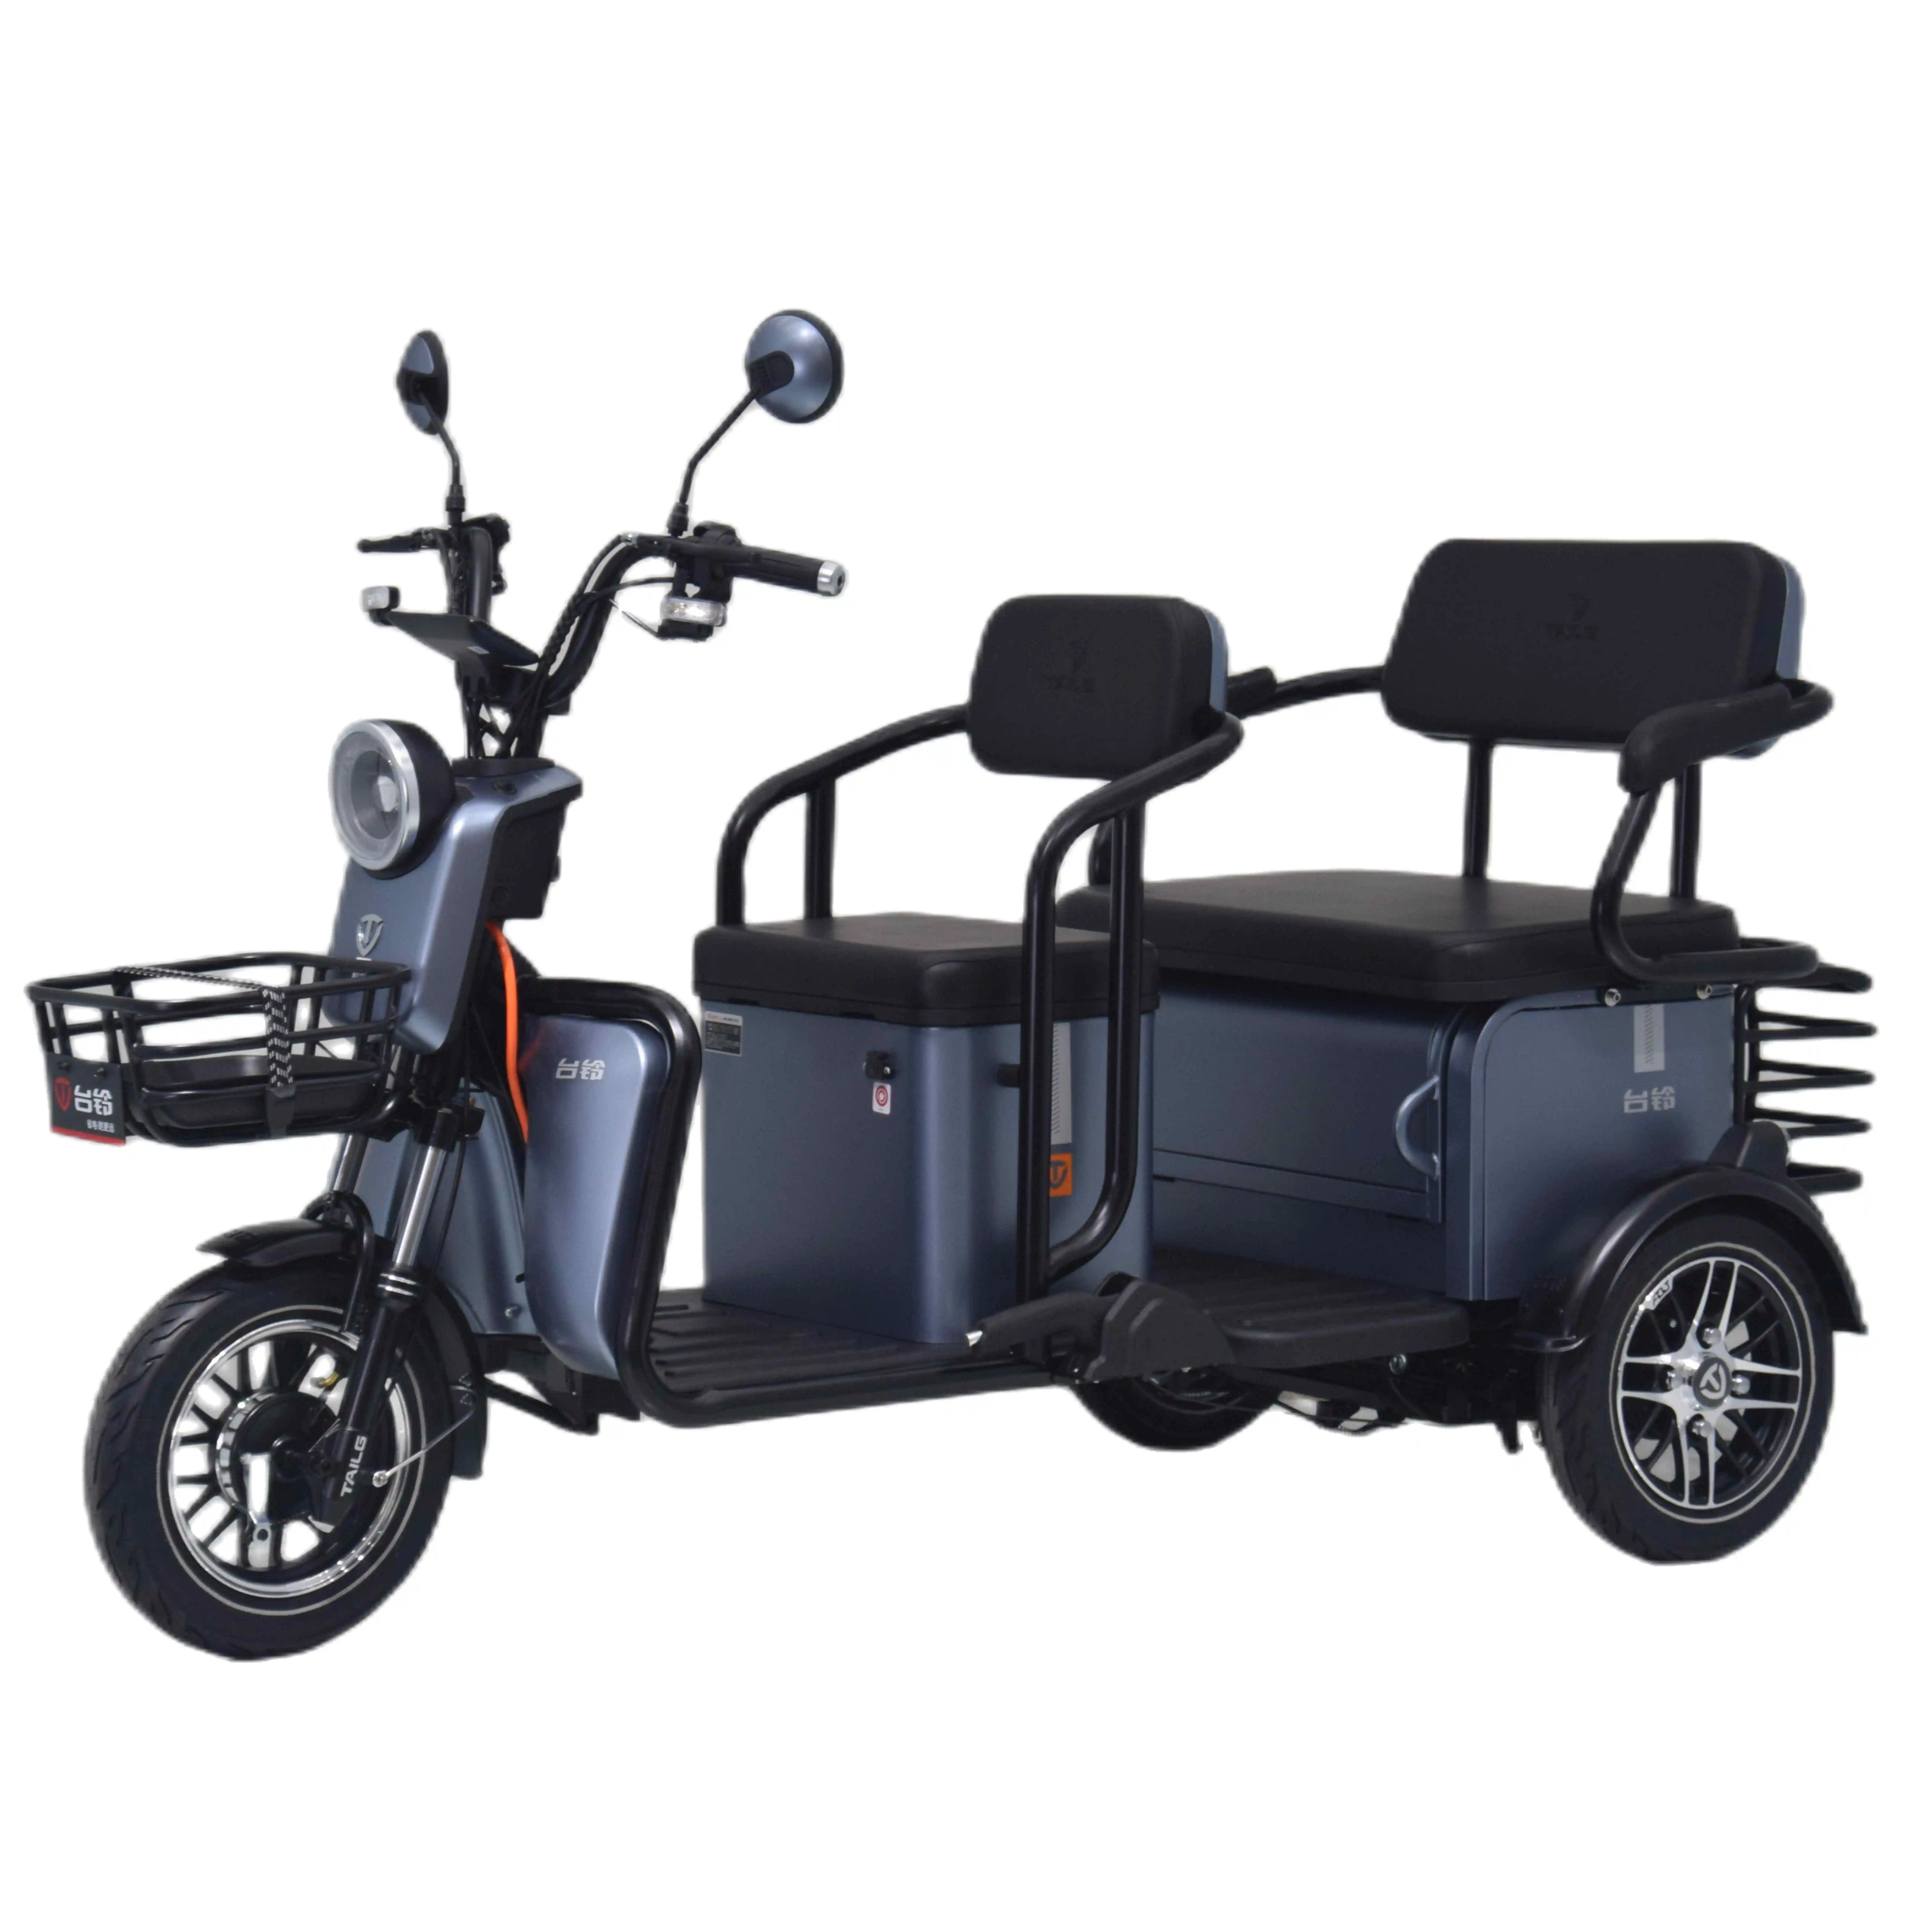 Tailg fabrika sıcak satış Moped Trike Scooter yolcularla üç tekerlekli motosiklet elektrikli üç tekerlekli bisiklet